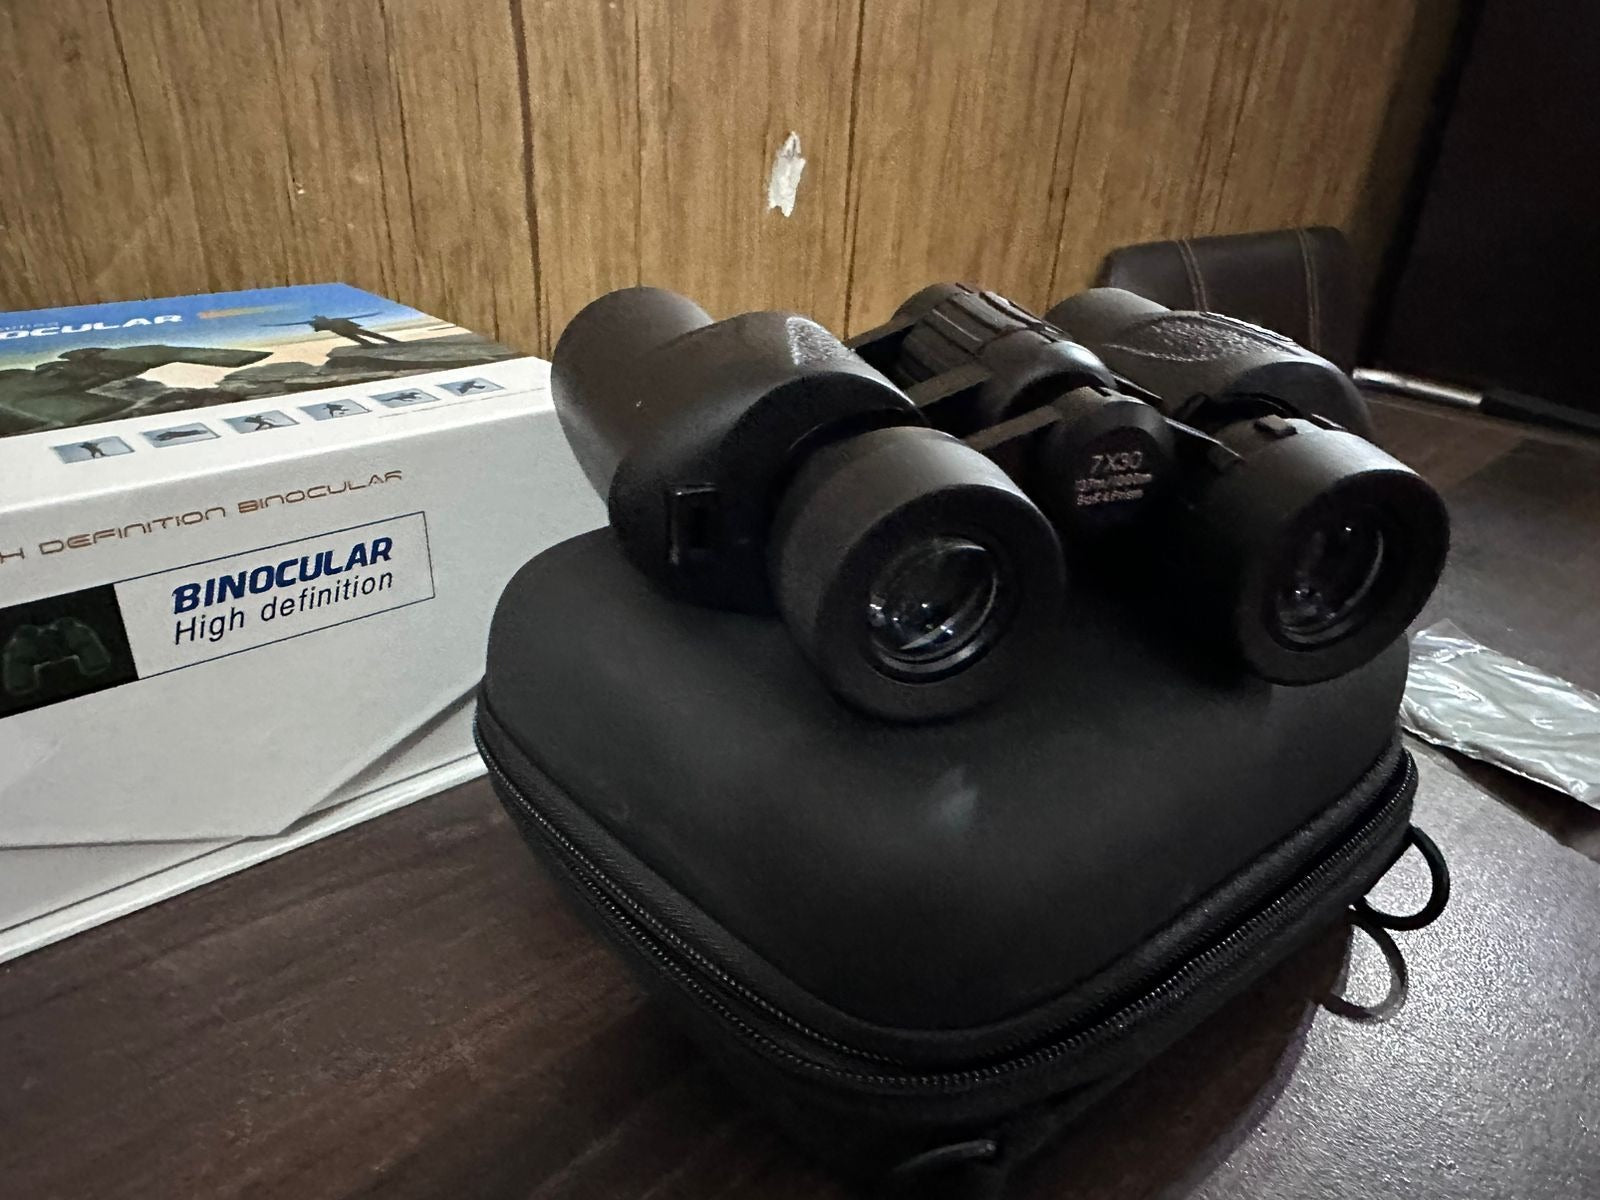 7x30 High Definition Lot Imported 1km Range Binocular